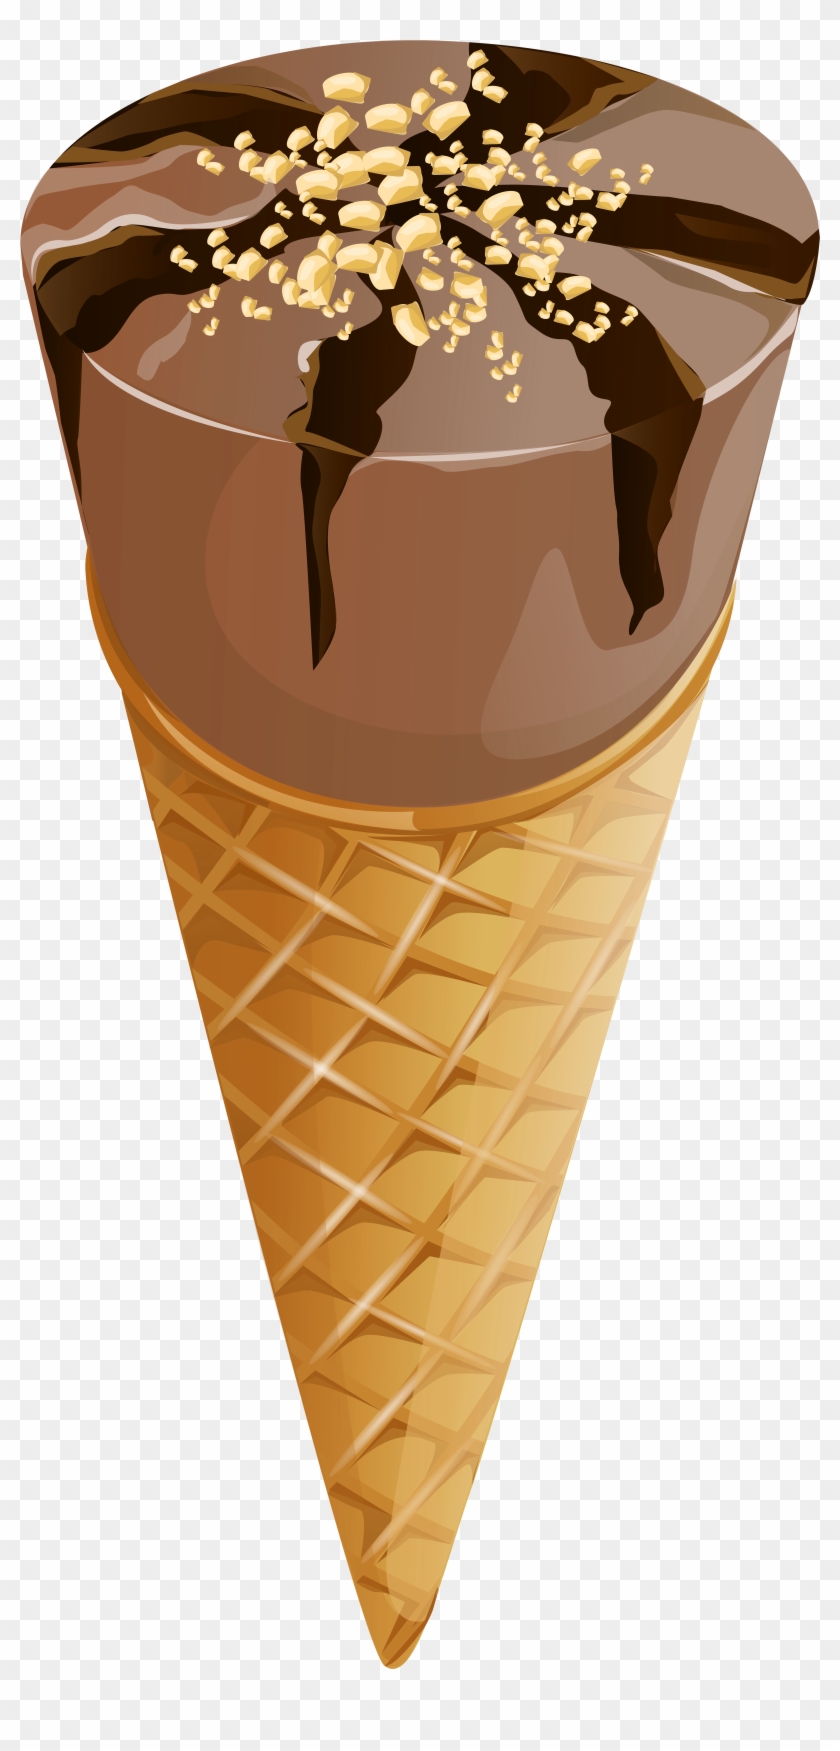 Chocolate Ice Cream Transparent Png Clip Art Image - Clip Art #558461